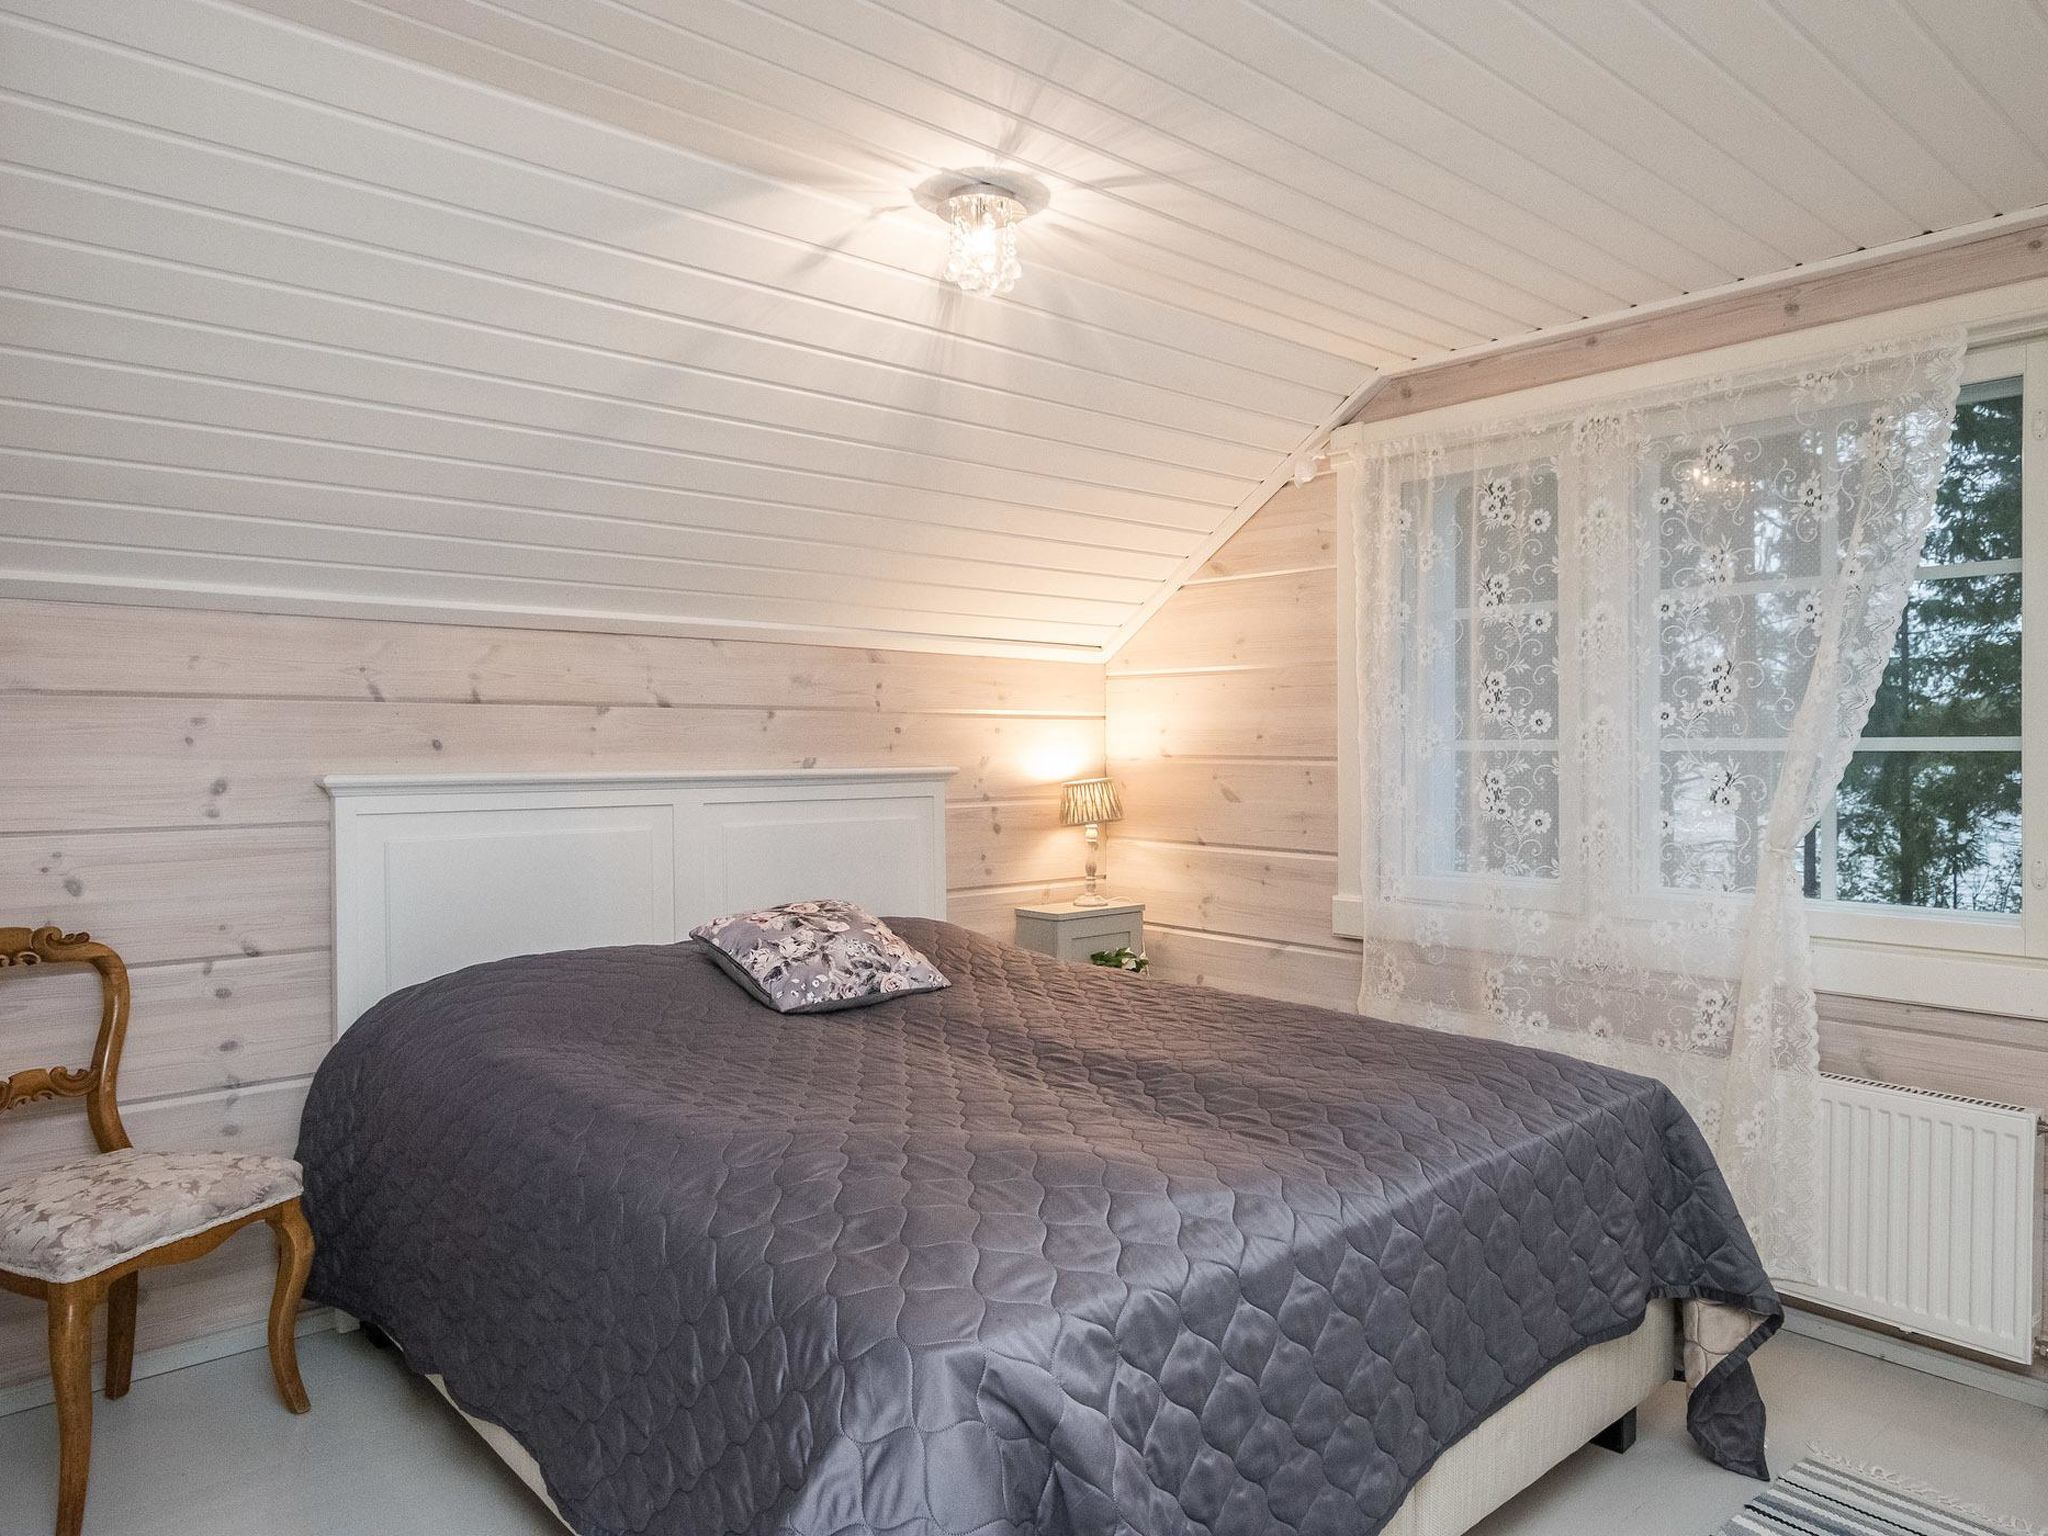 Photo 18 - 4 bedroom House in Savonlinna with sauna